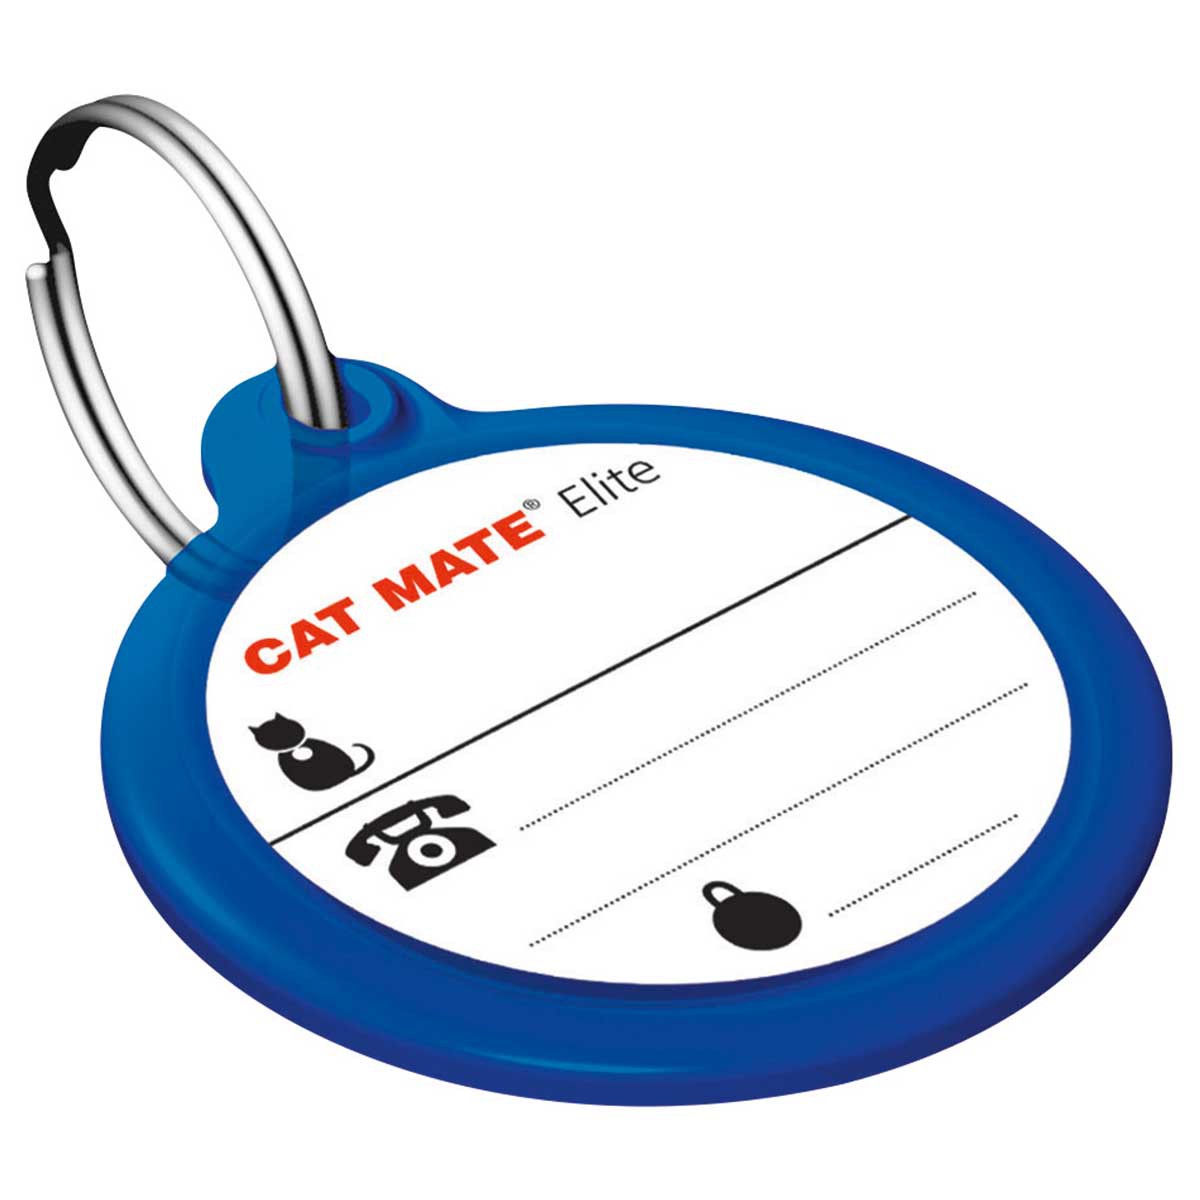 Marca Cat Mate Electronic i.d